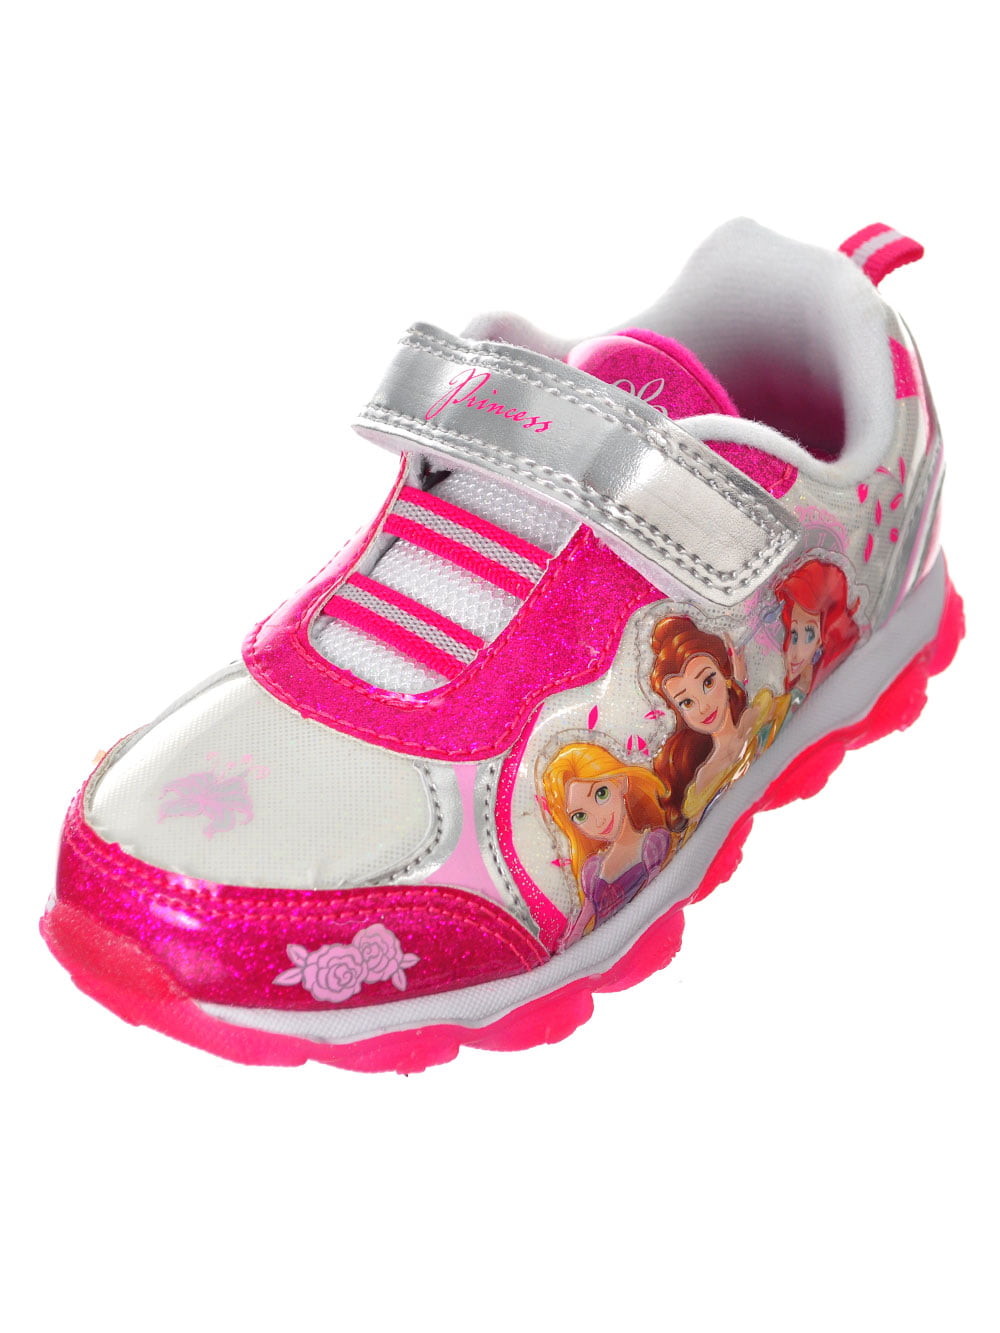 princess light up shoes